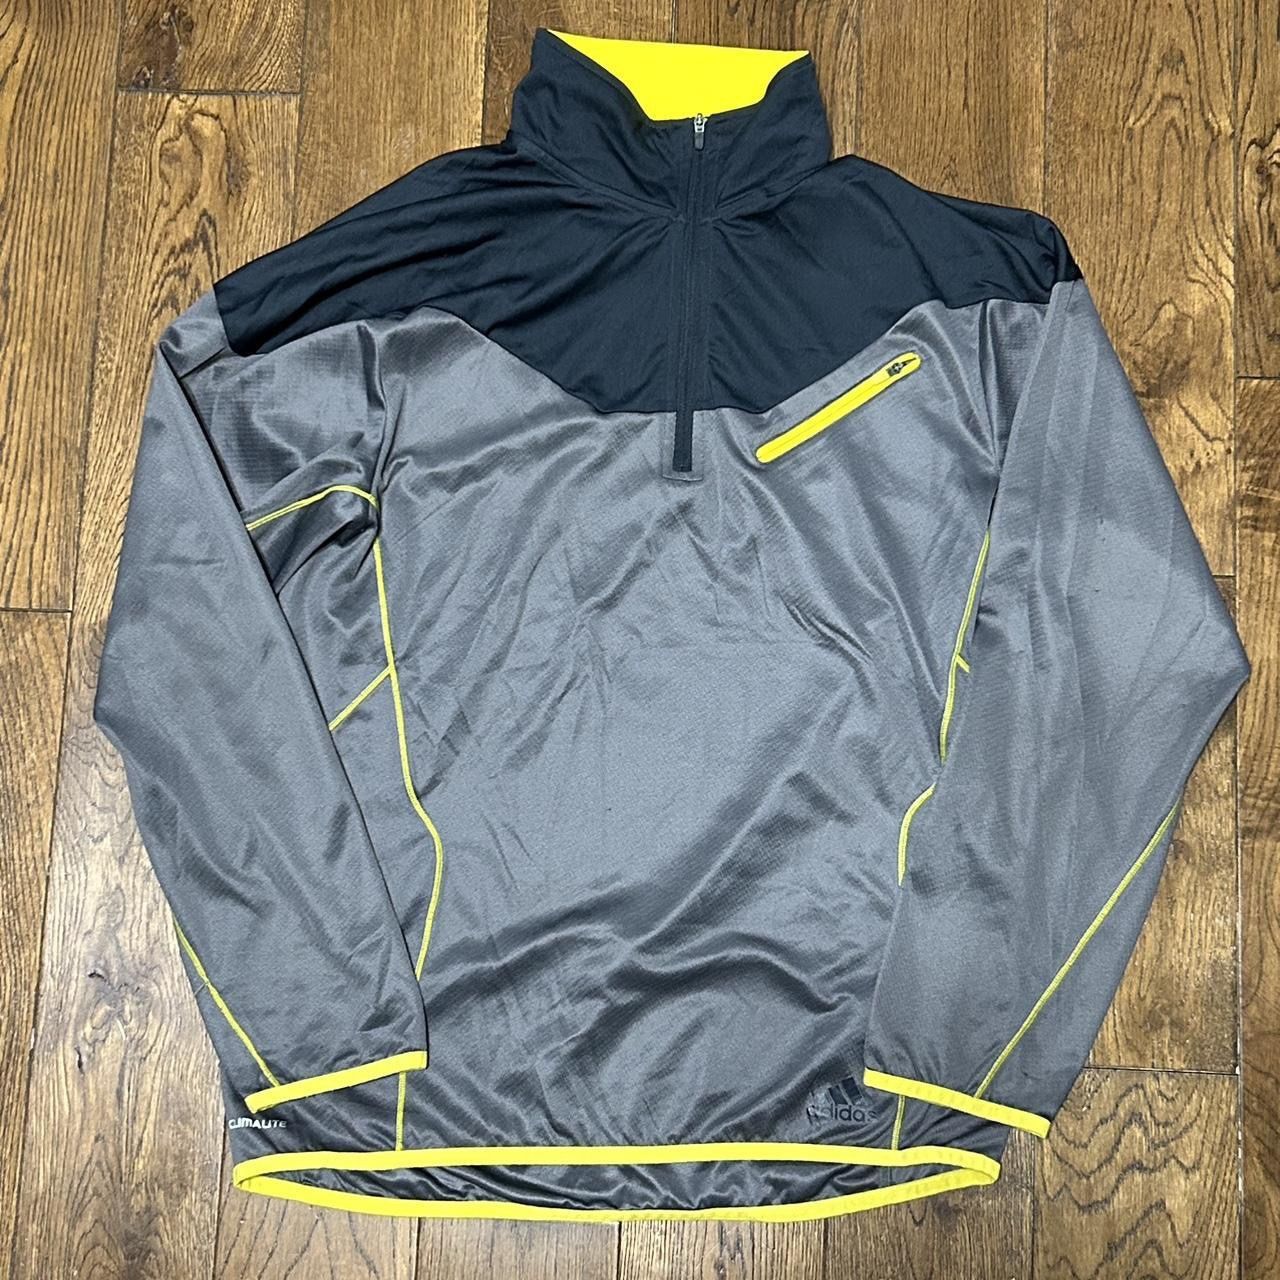 Adidas ClimaLite 1/4 Zip Grey Yellow Jacket Men's size small.